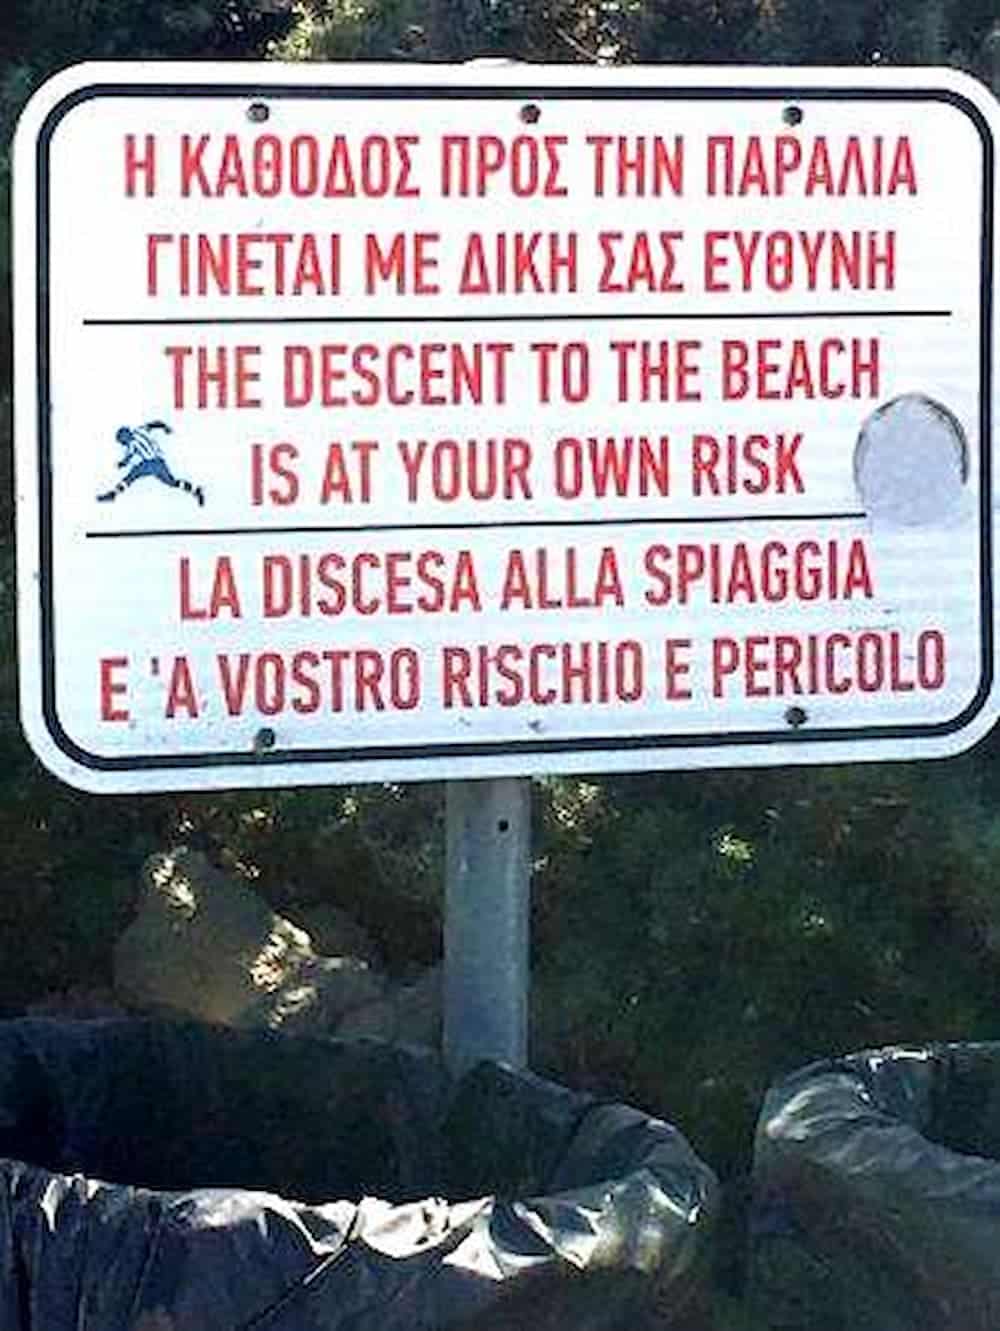 Pinakida - Η πιο επικίνδυνη παραλία στο Αιγαίο βρίσκεται στην Μήλο - «Η κάθοδος γίνεται με δική σας ευθύνη» (εικόνα & βίντεο)